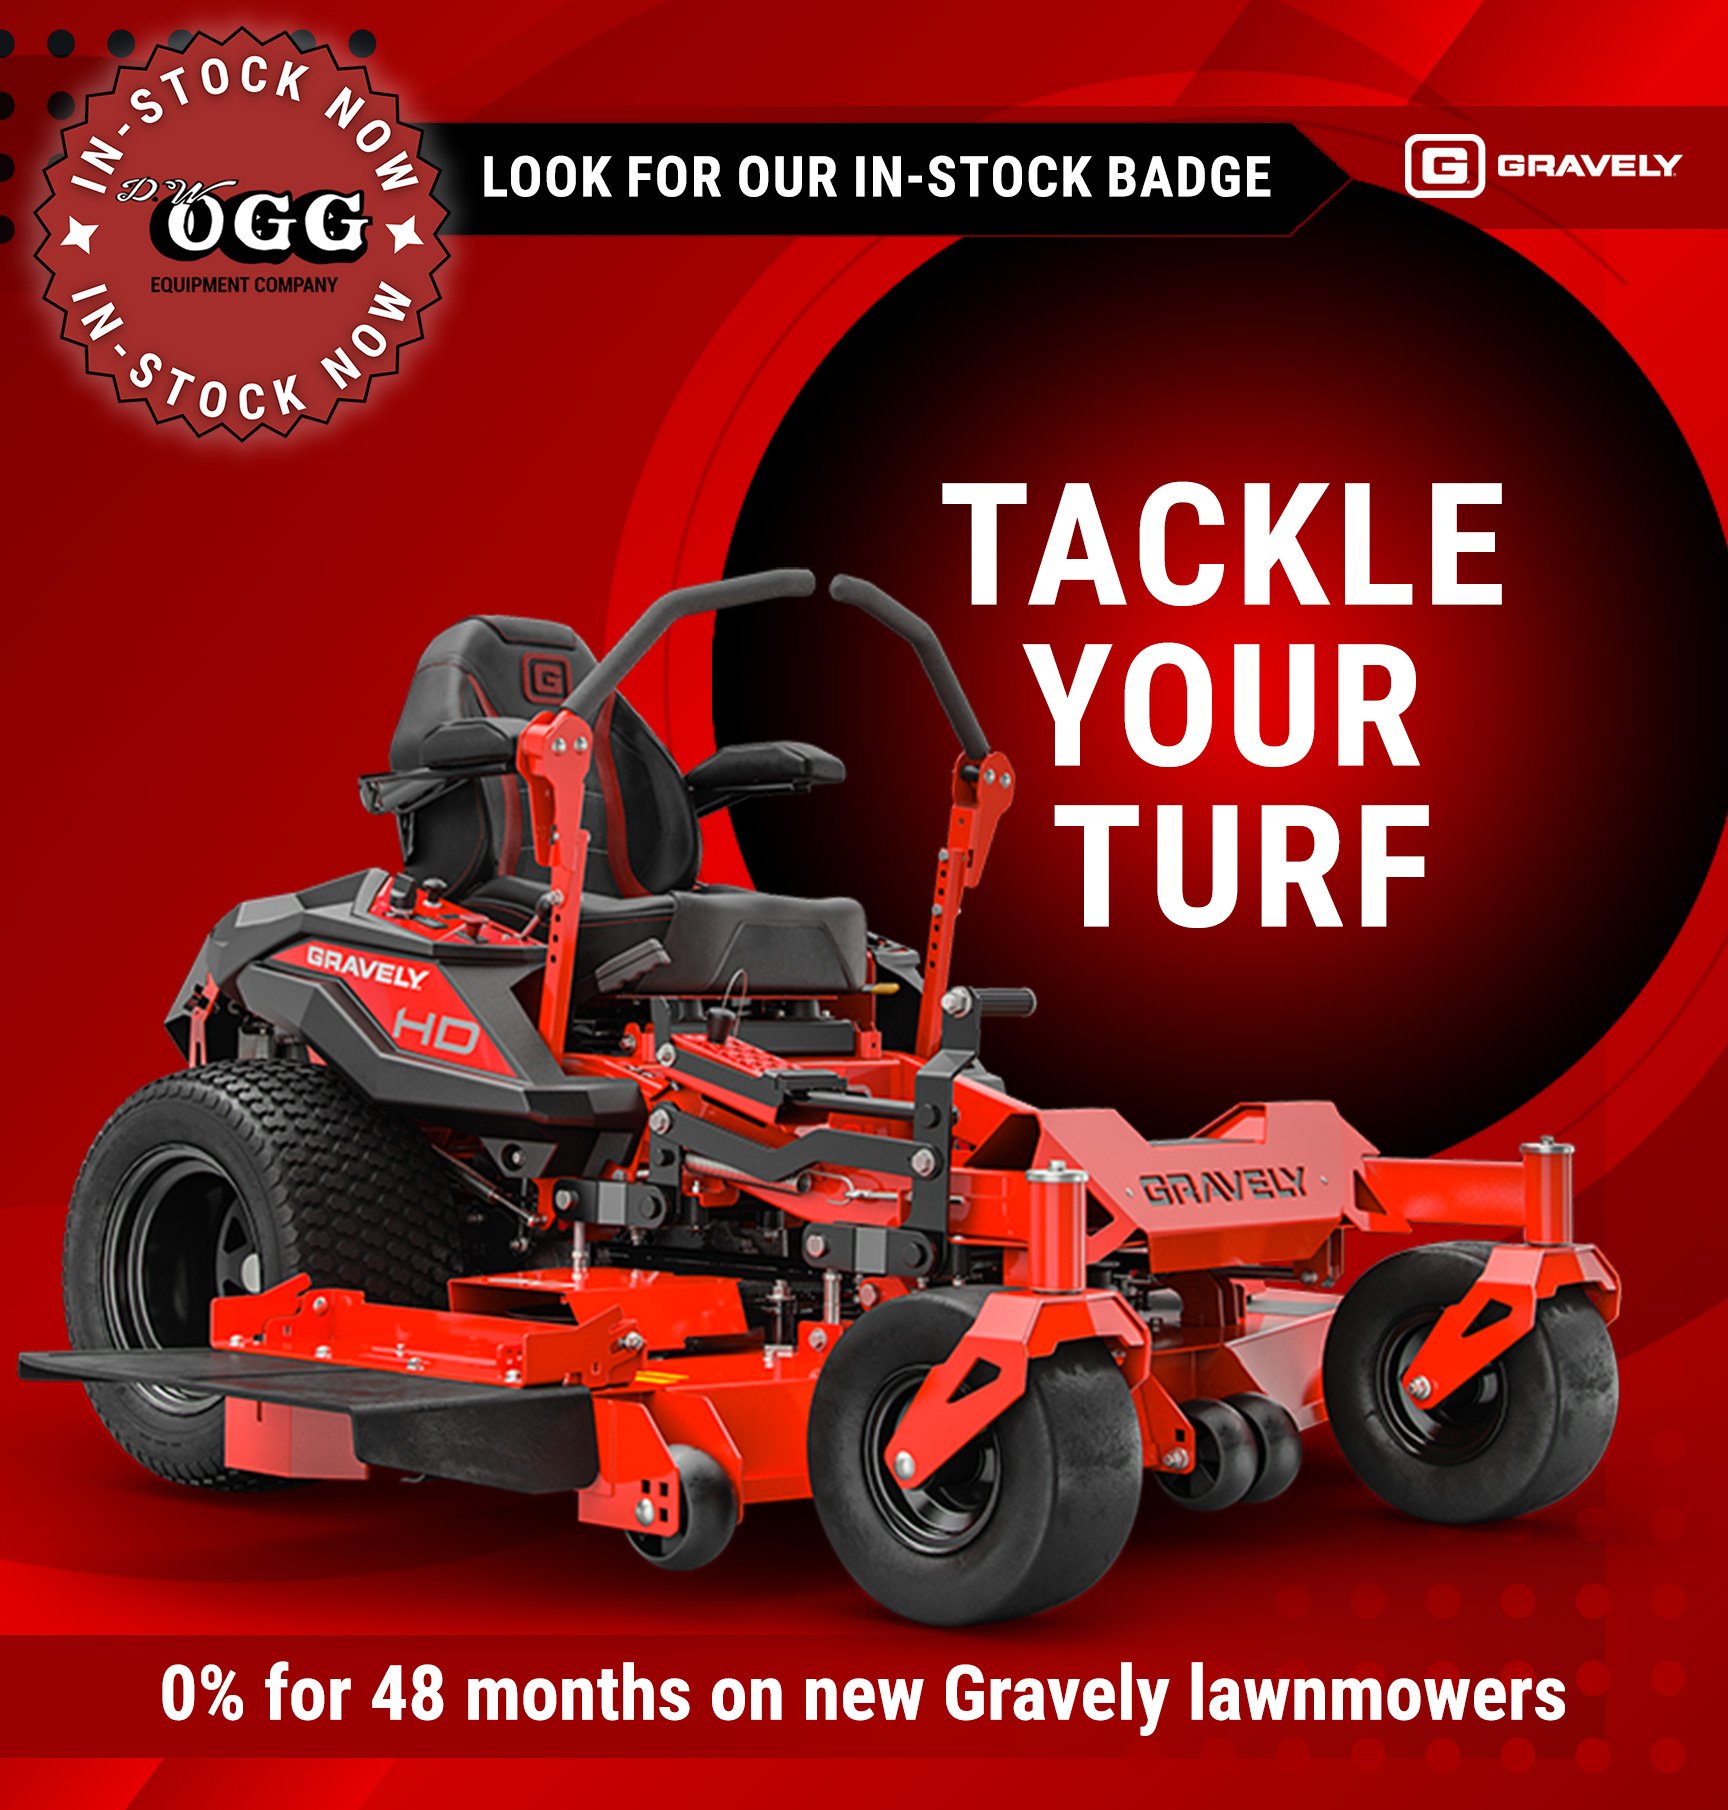 Gravely Zero Turn Lawnmowers Dw Ogg Equipment Co 